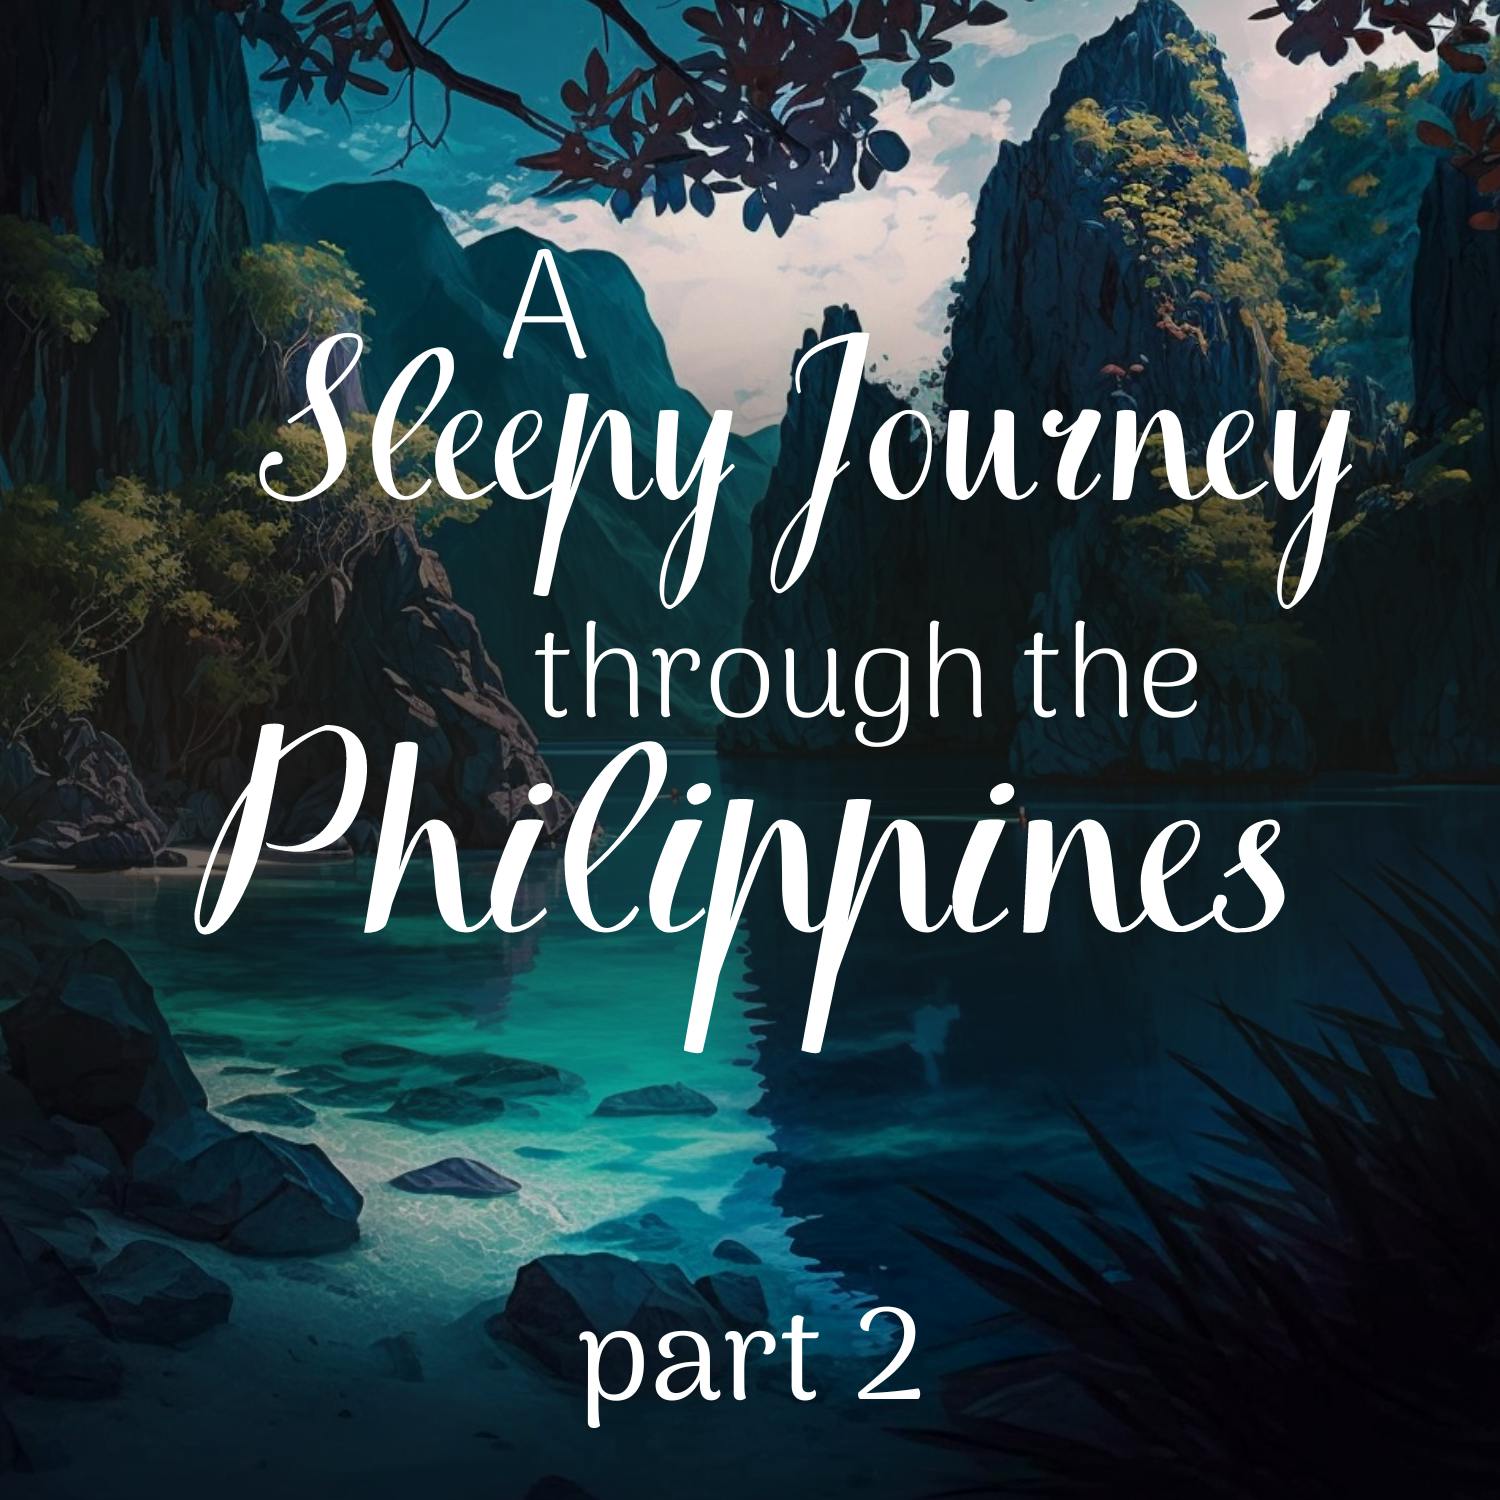 A Sleepy Journey through the Philippines: Part 2